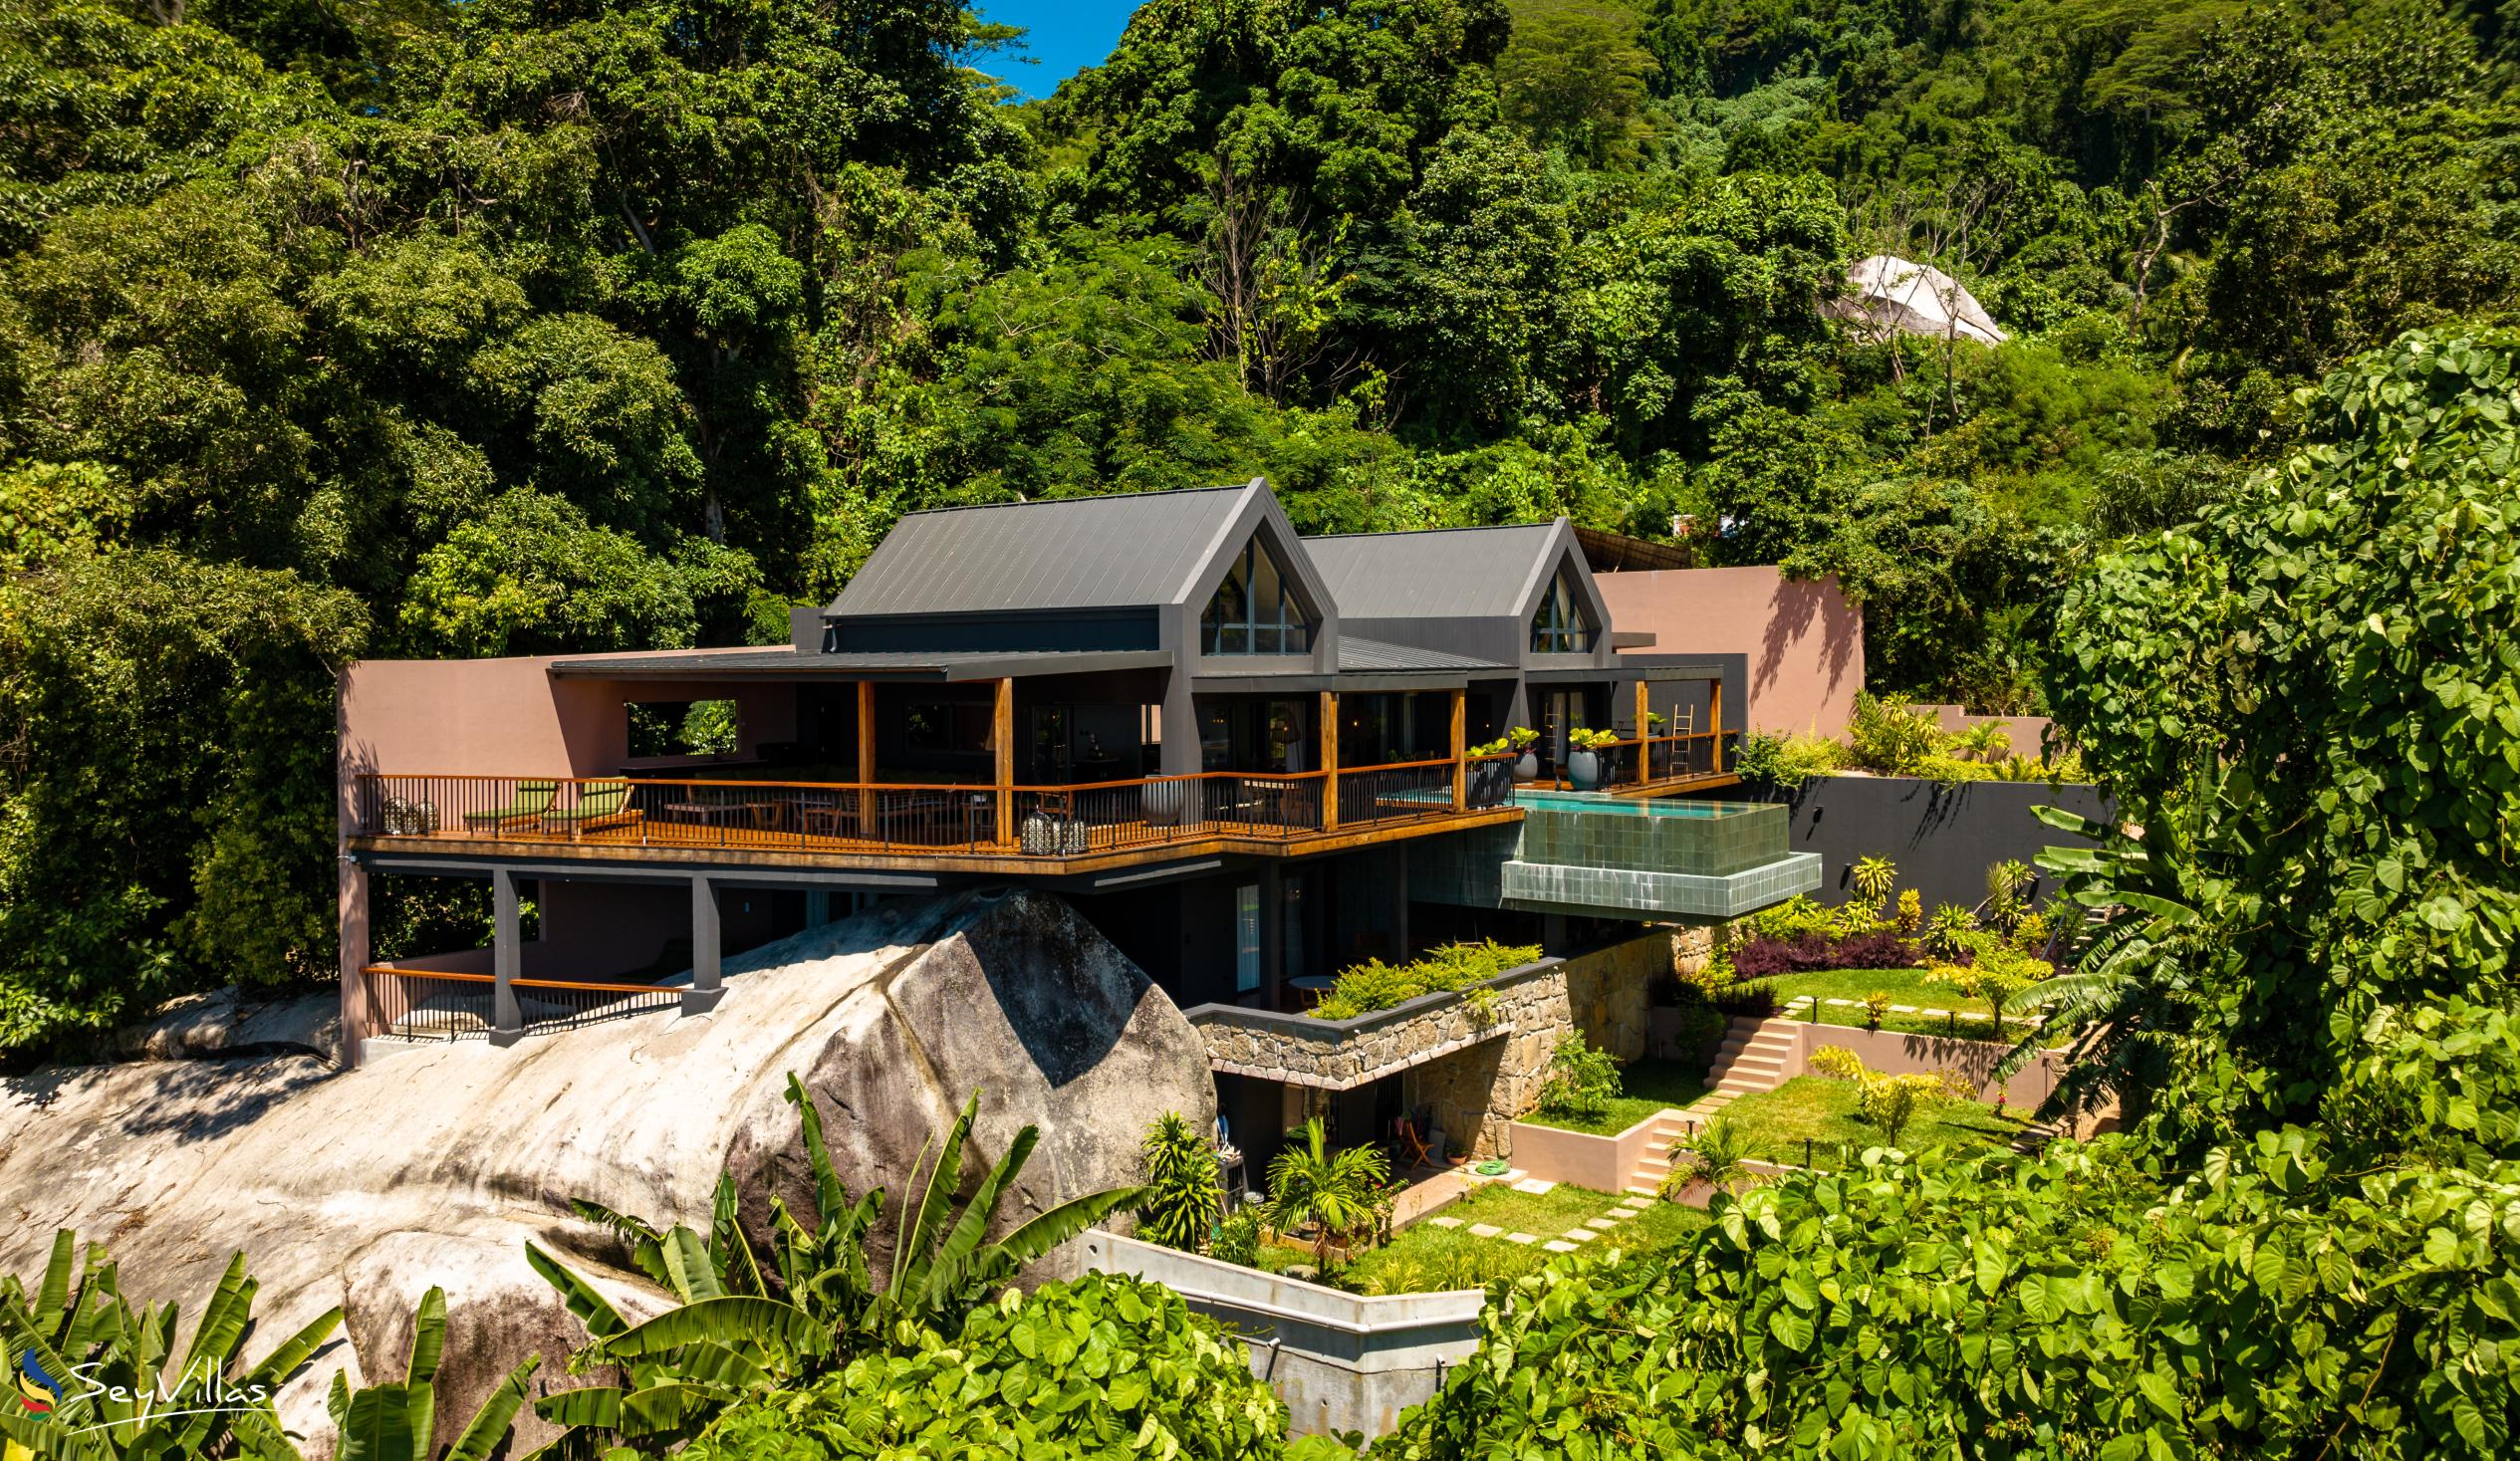 Photo 6: Maison Gaia - Outdoor area - Mahé (Seychelles)